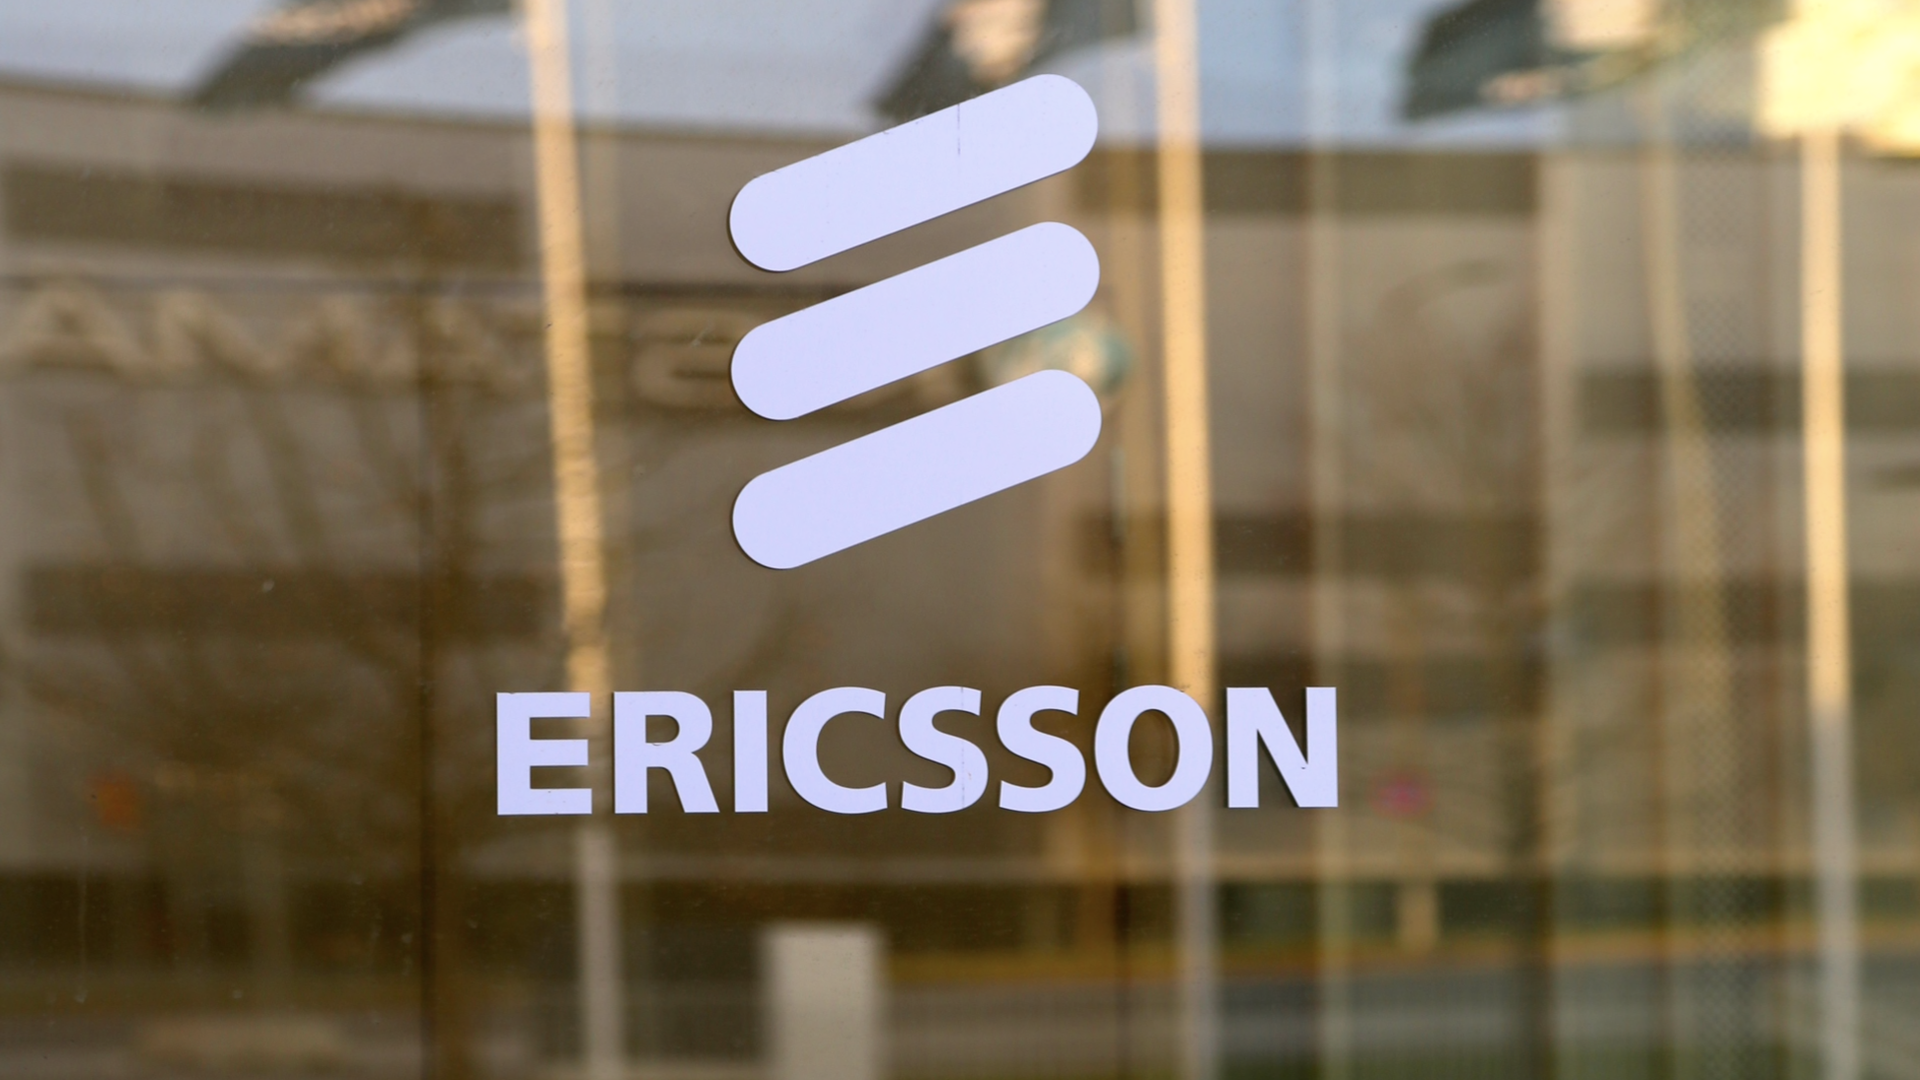 An image of Ericsson headquarters